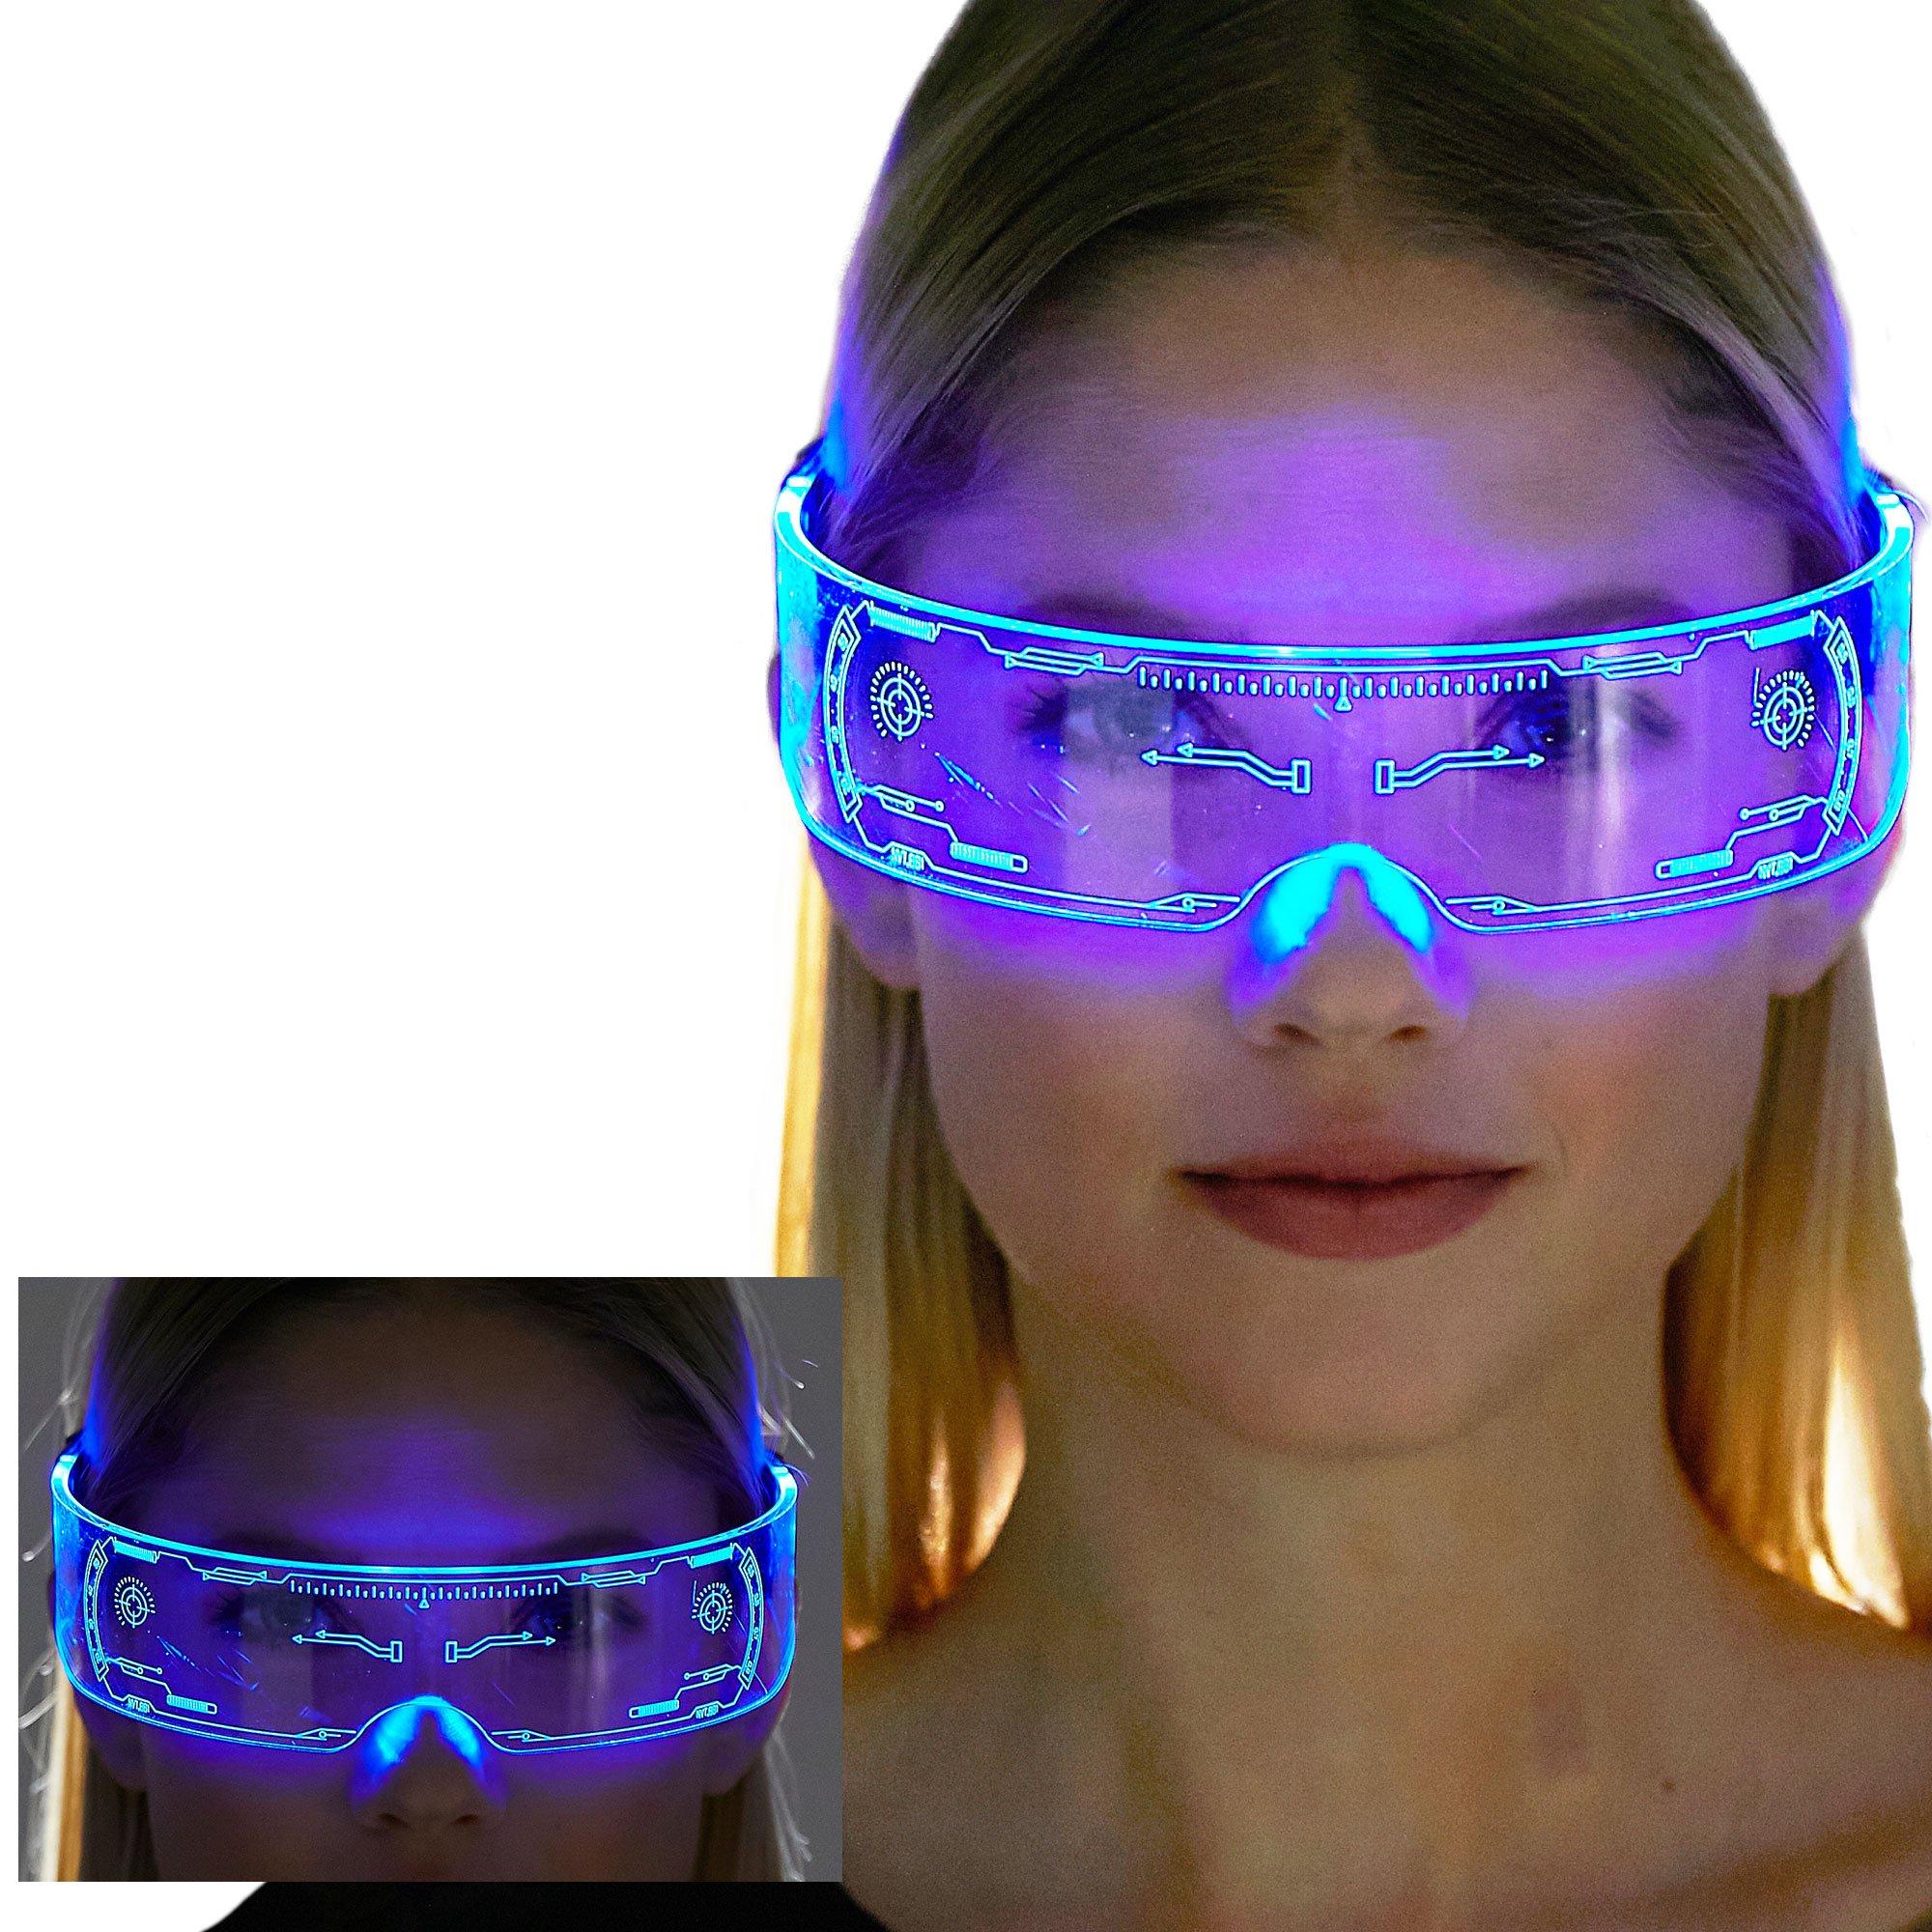 Lunettes Cyberpunk Led, Lunette Futuriste, Led Light Up Glasses